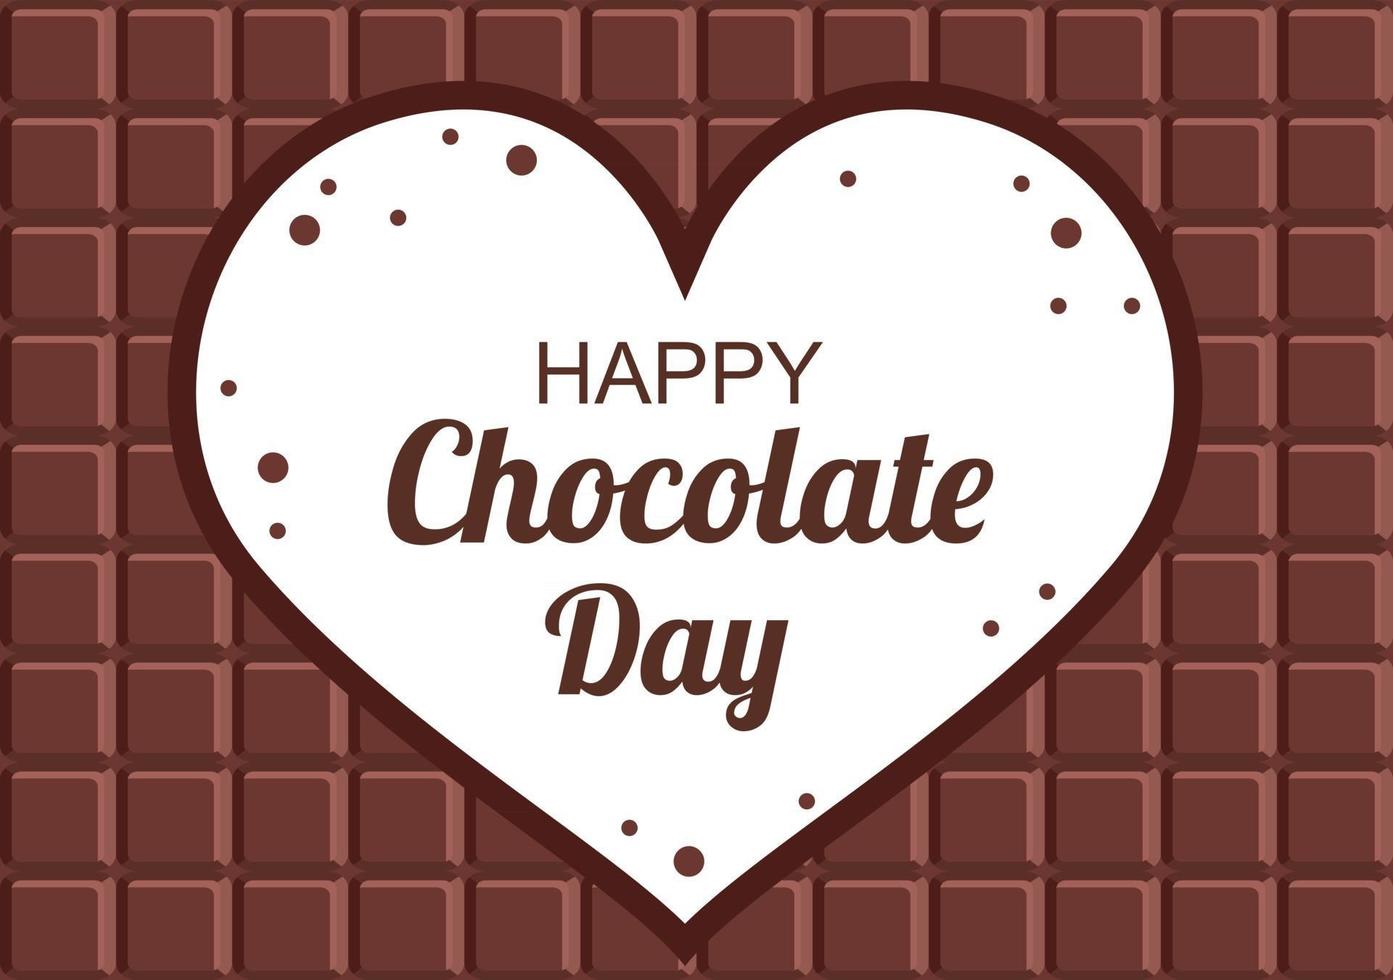 glad choklad dag firande vektor illustratio